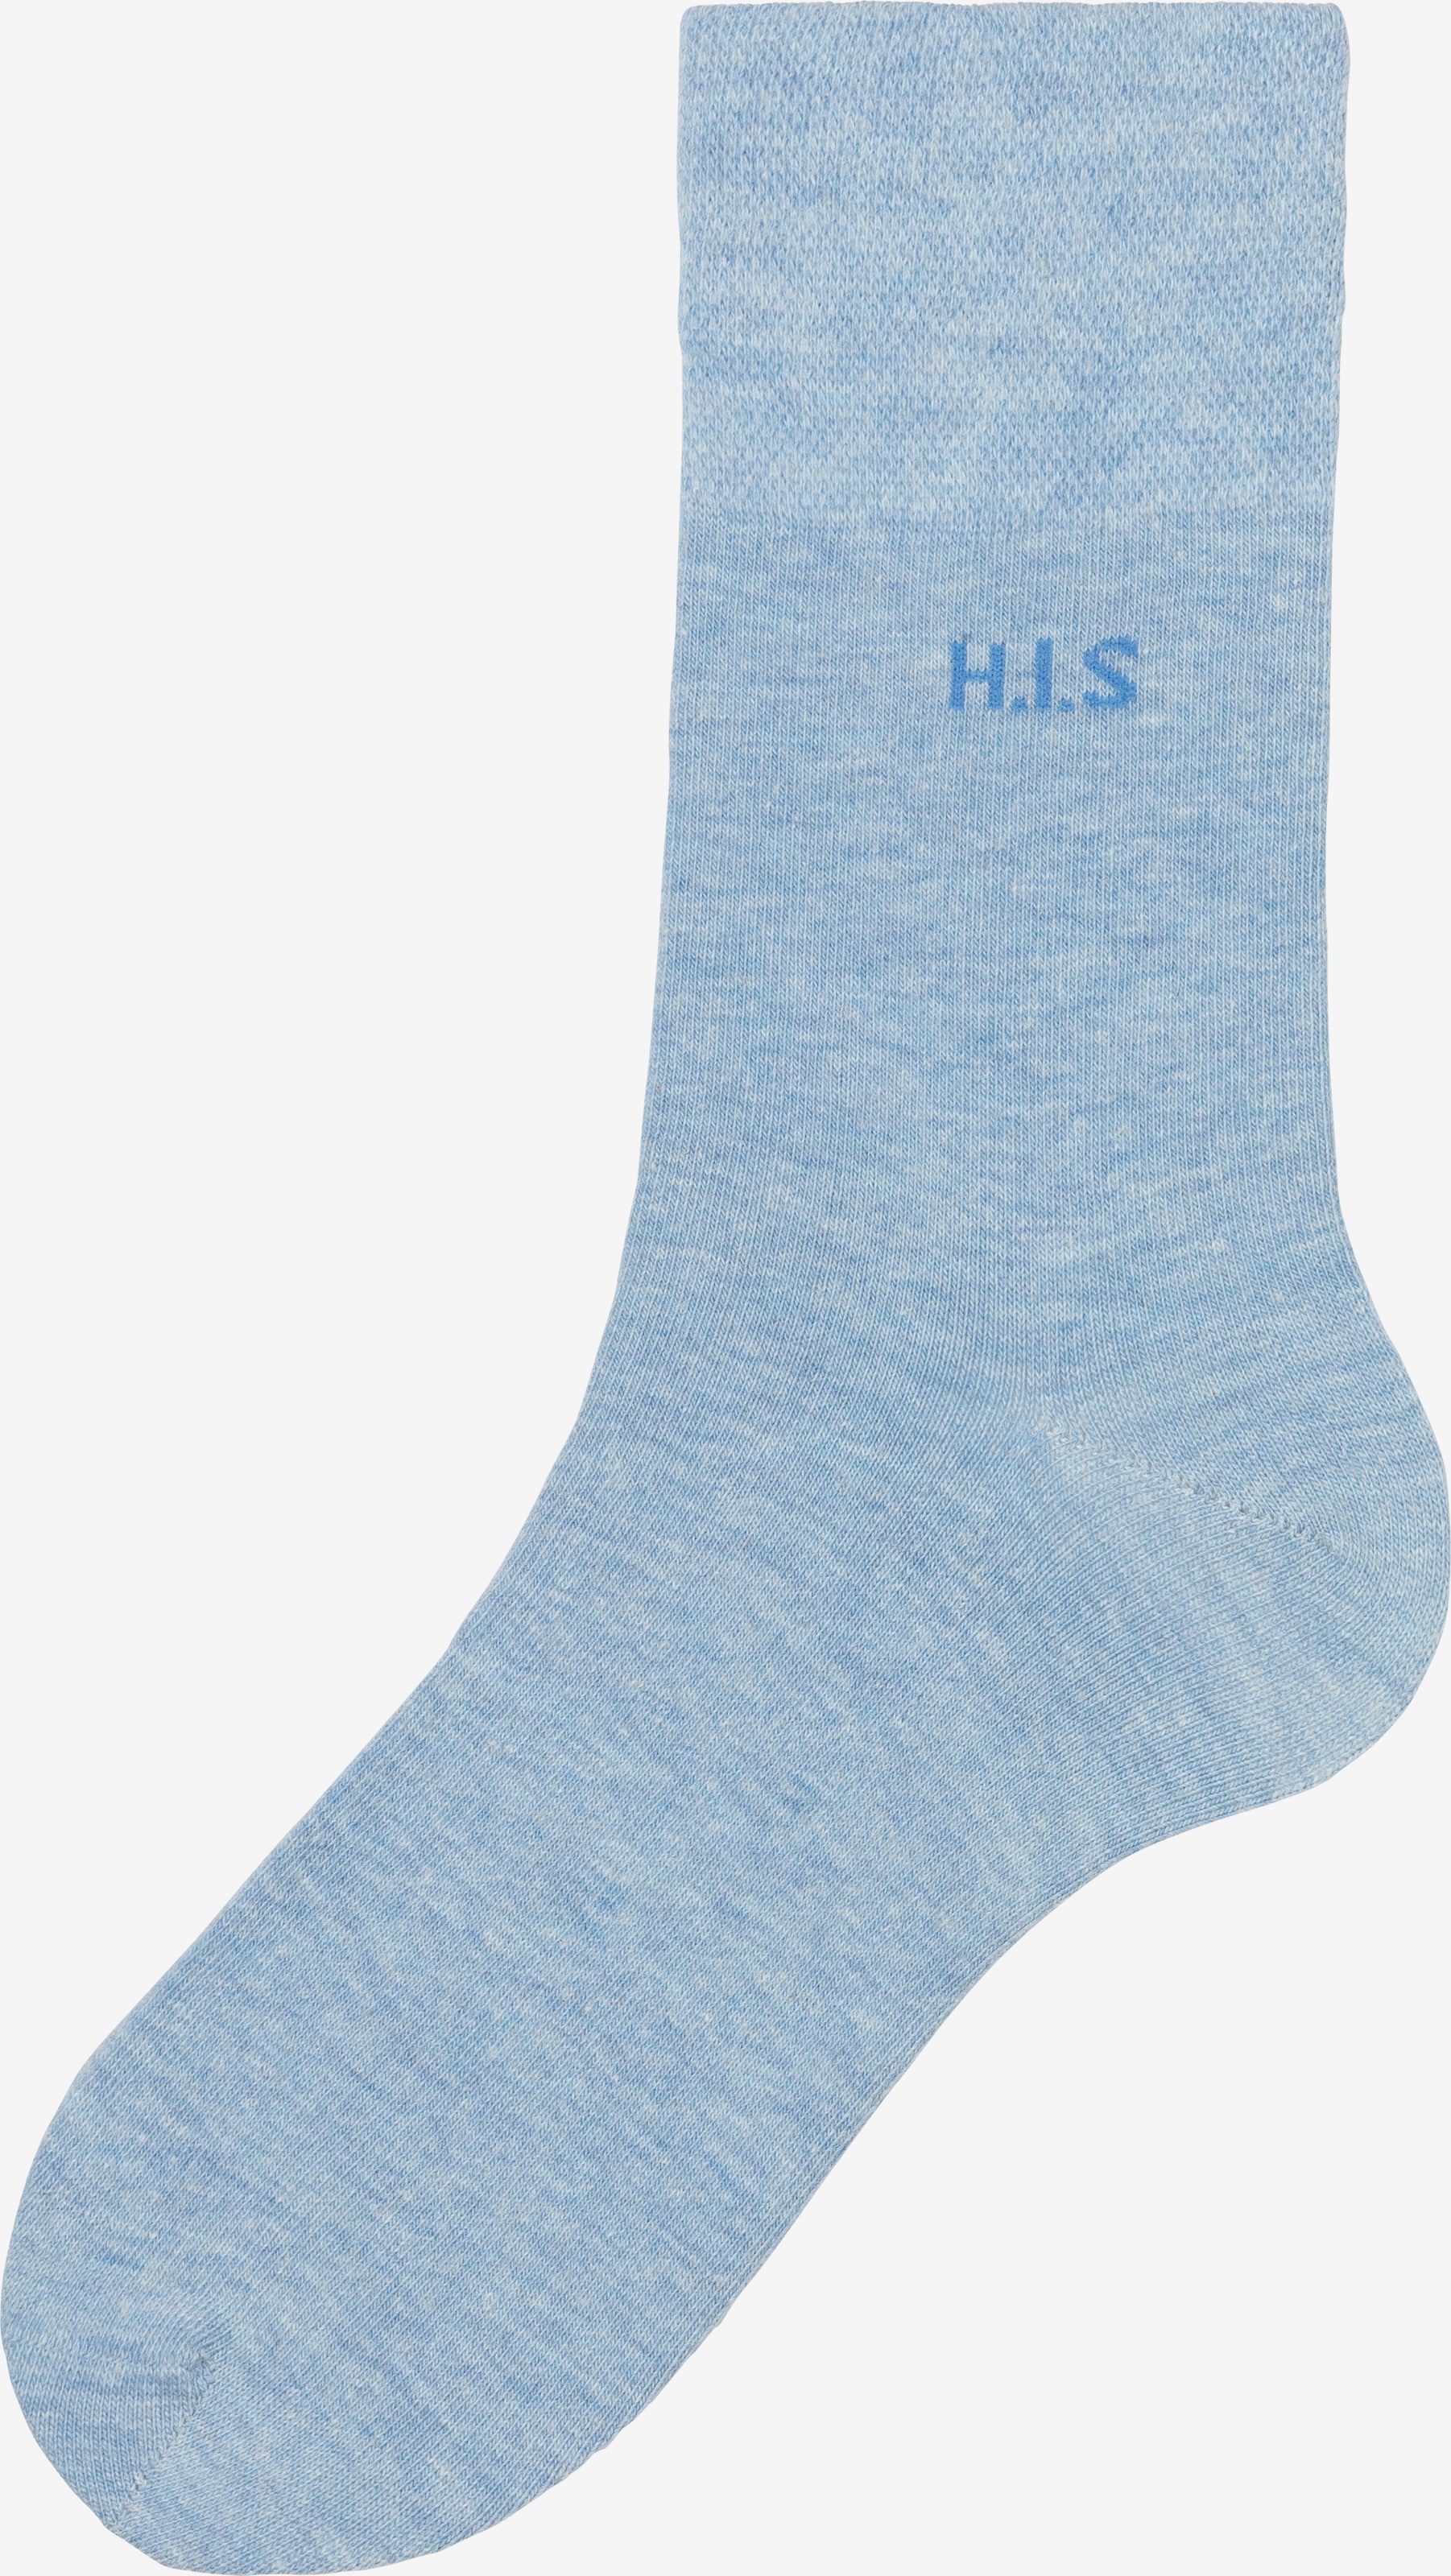 H.I.S Socken in Hellblau, Dunkelblau | ABOUT YOU